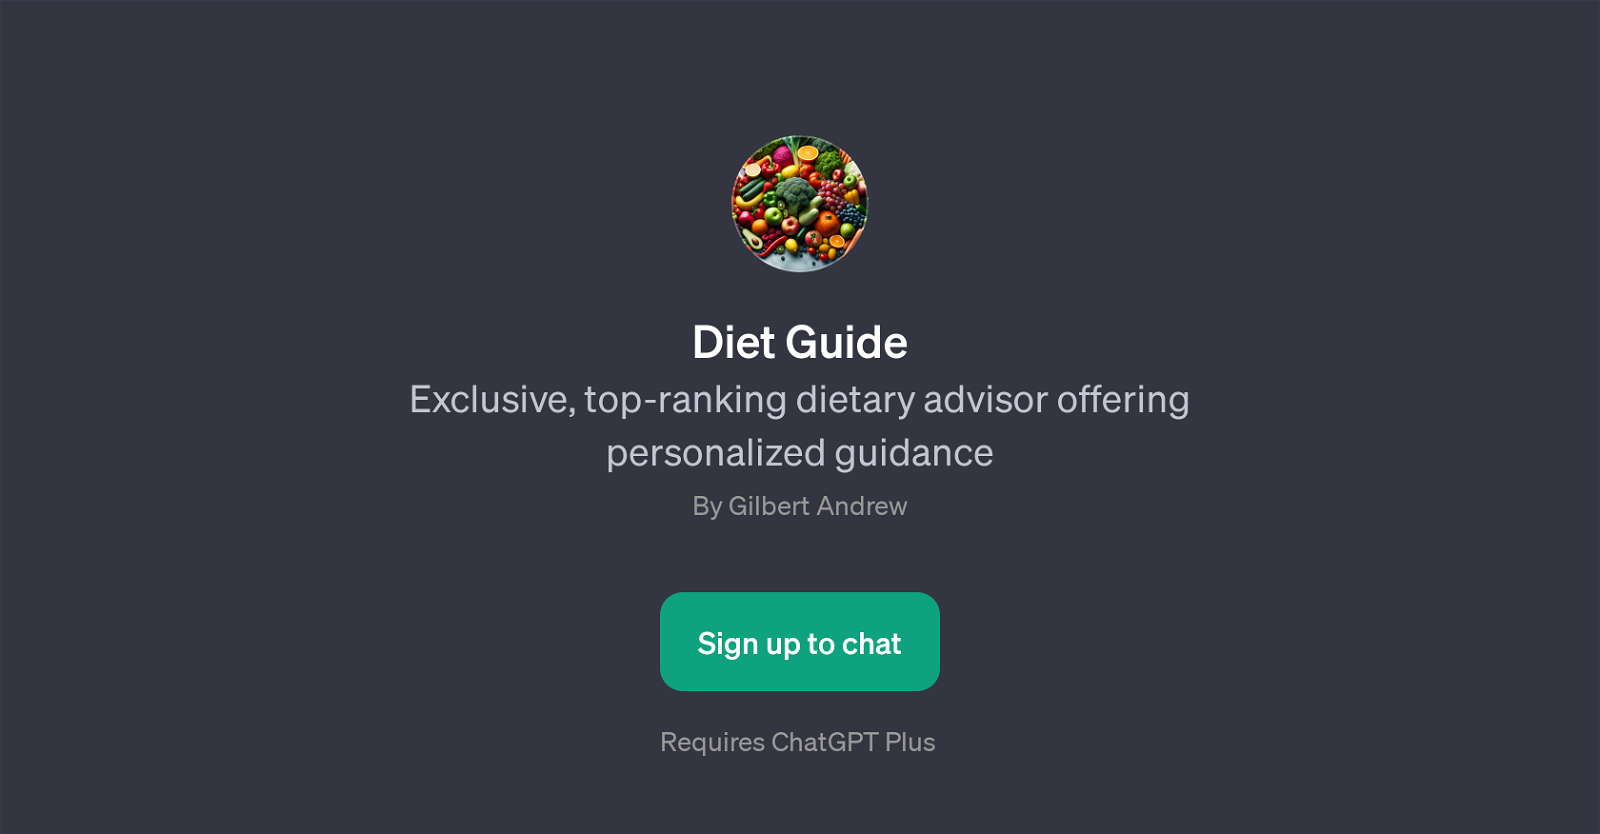 Diet Guide website